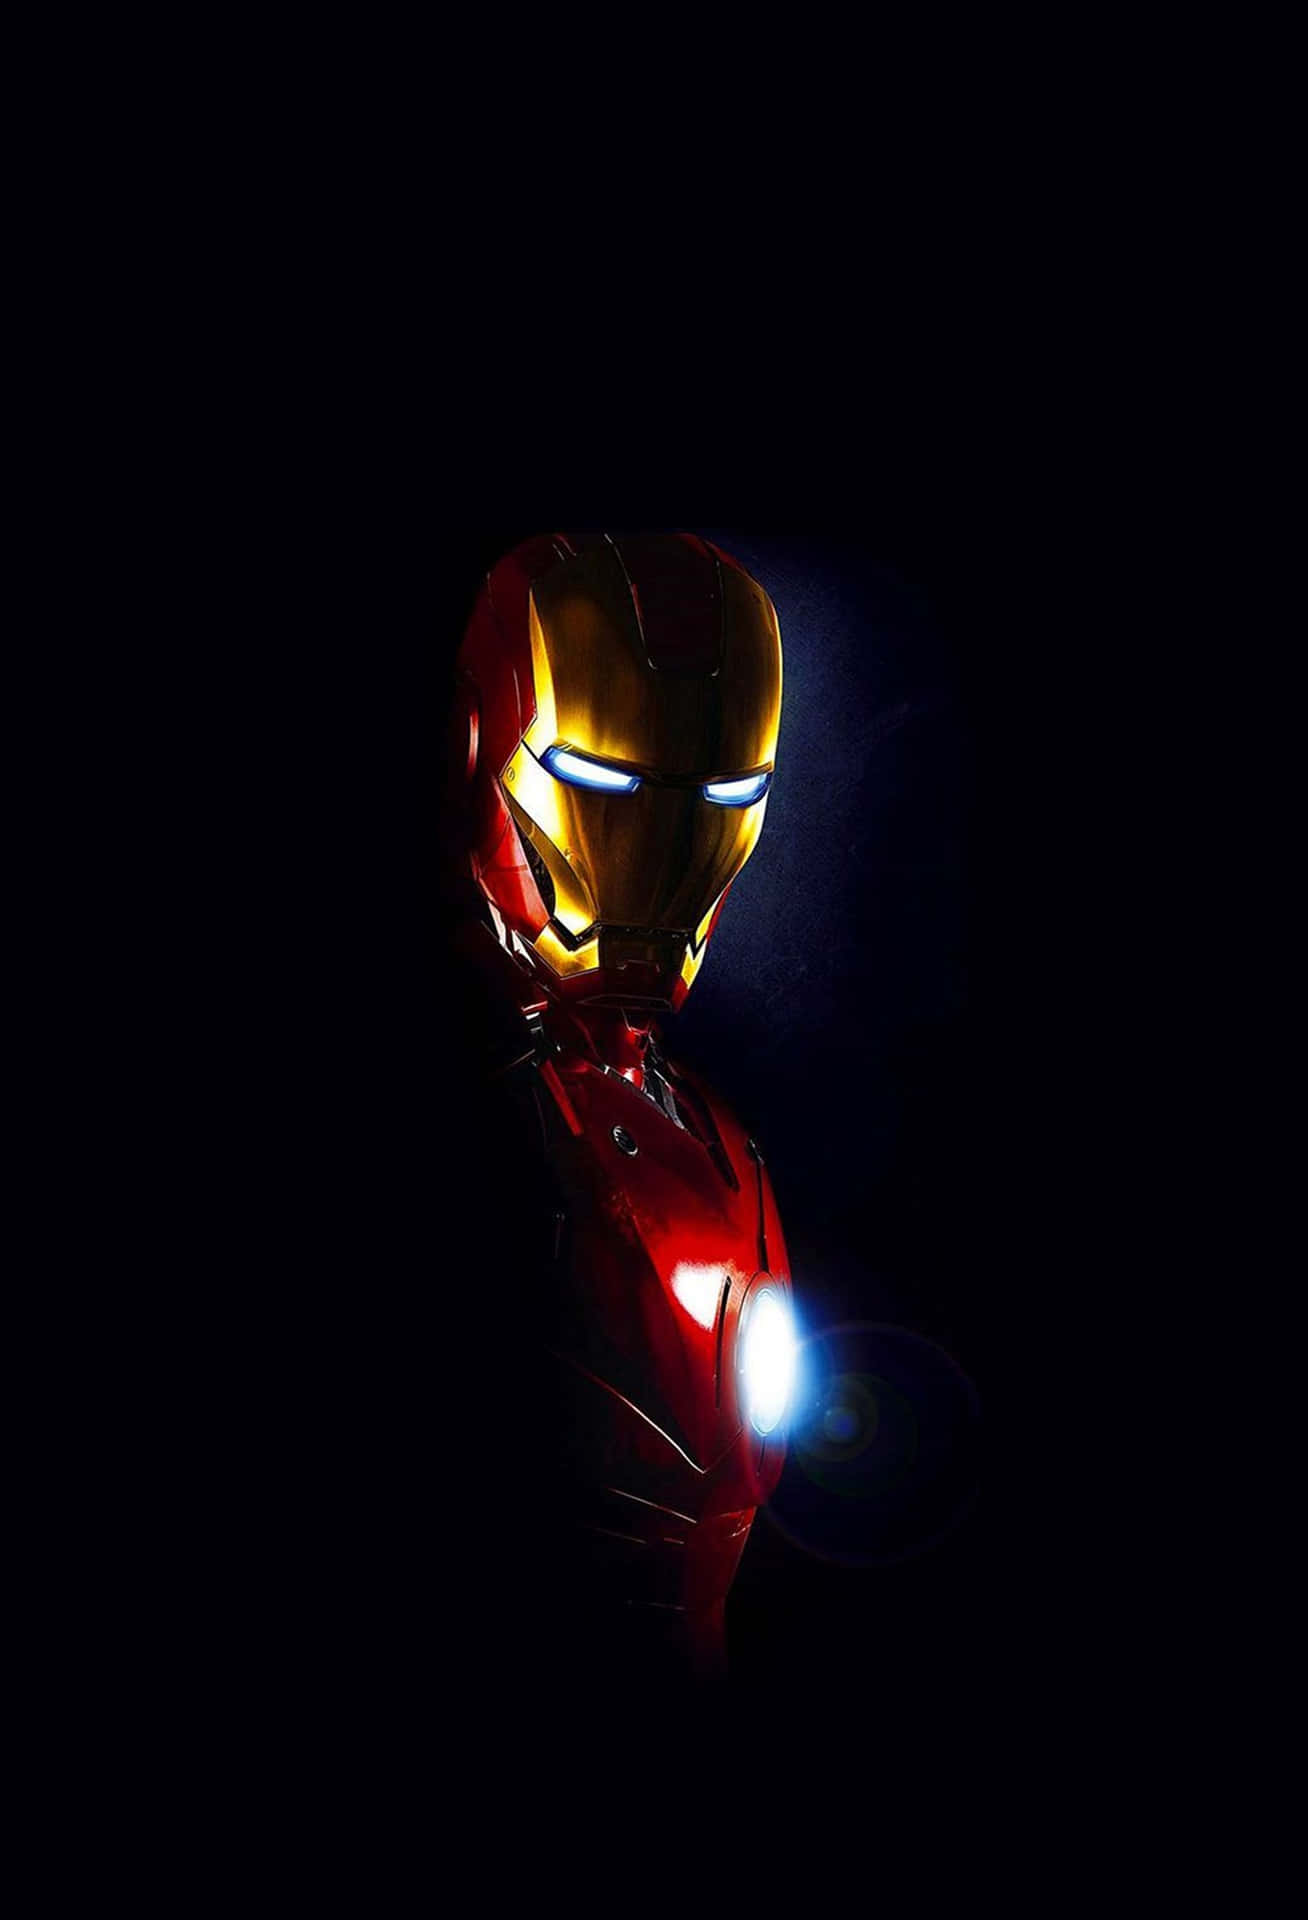 Download Glowing Arc Reactor Of Iron Man 4k Mobile Wallpaper | Wallpapers .com